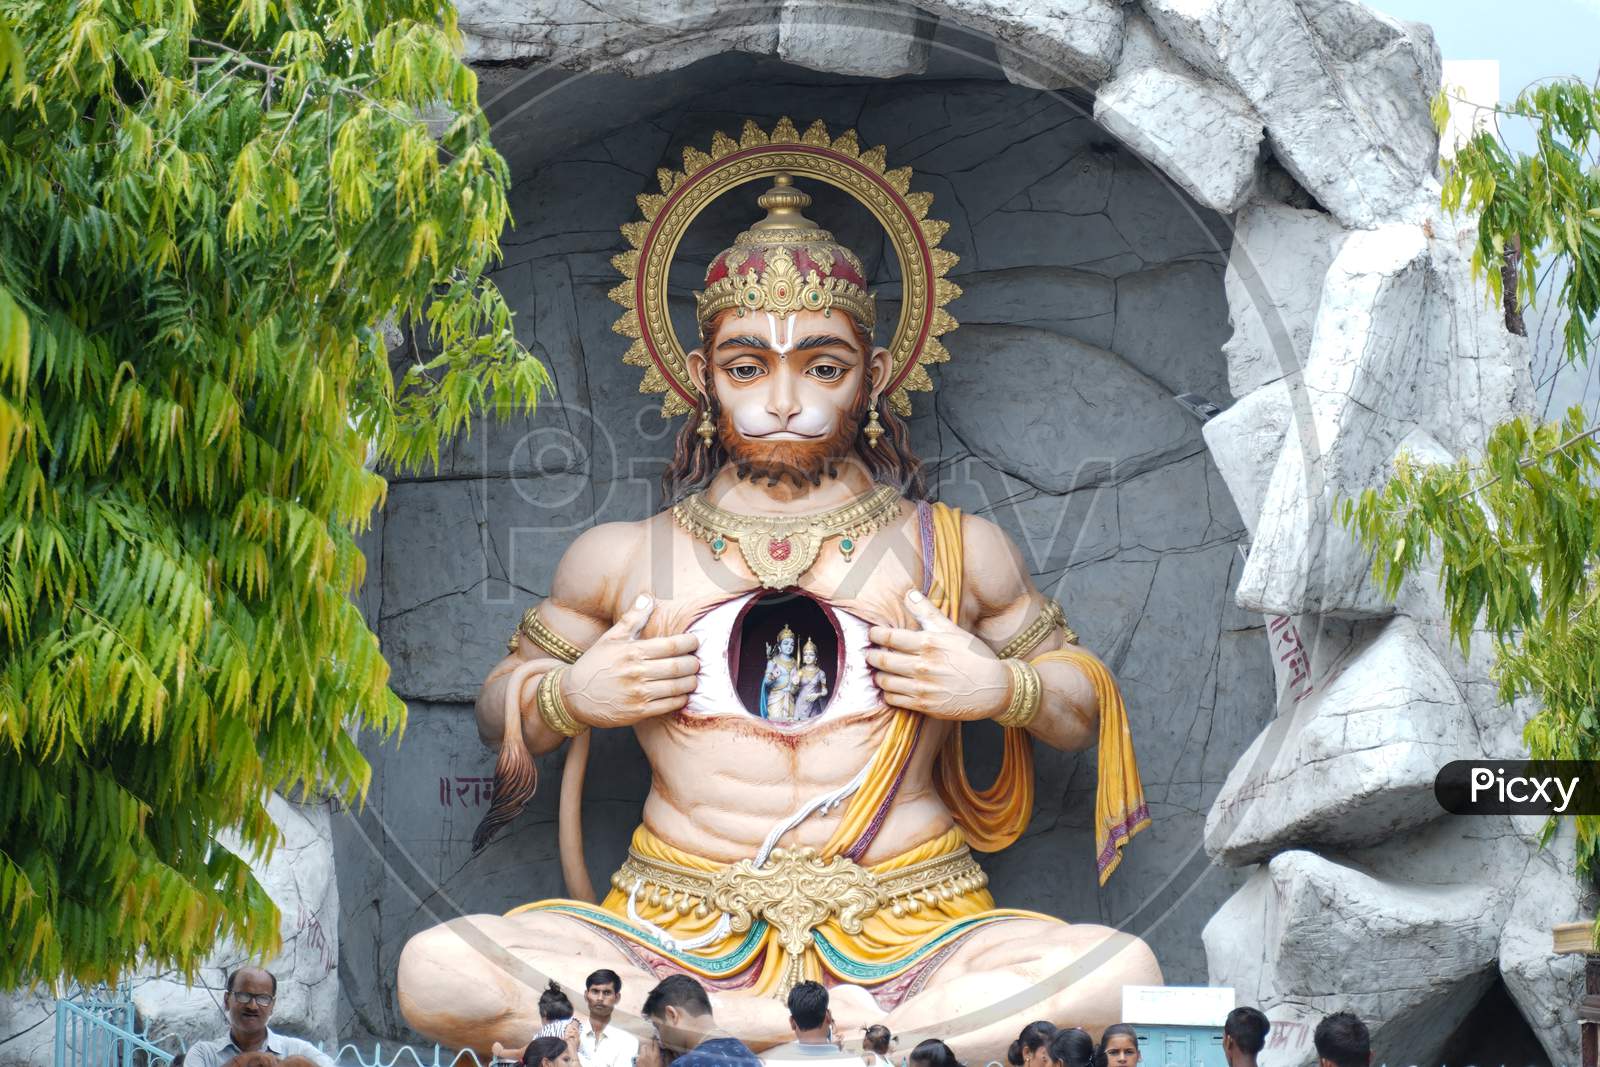 Beautiful statue of god Hanuman